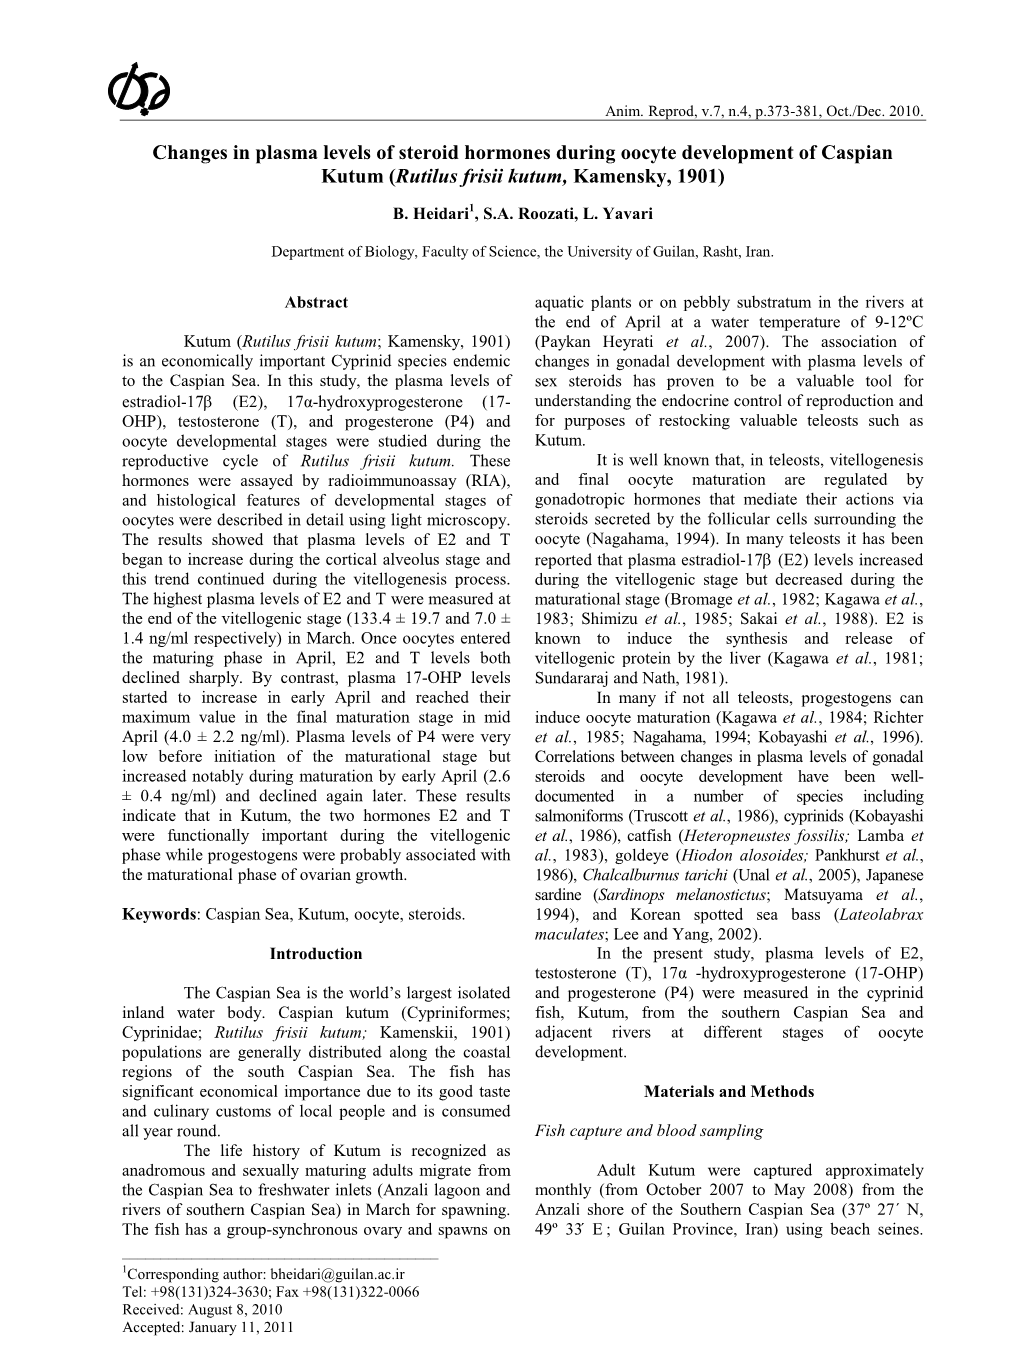 Changes in Plasma Levels of Steroid Hormones During Oocyte Development of Caspian Kutum (Rutilus Frisii Kutum, Kamensky, 1901)